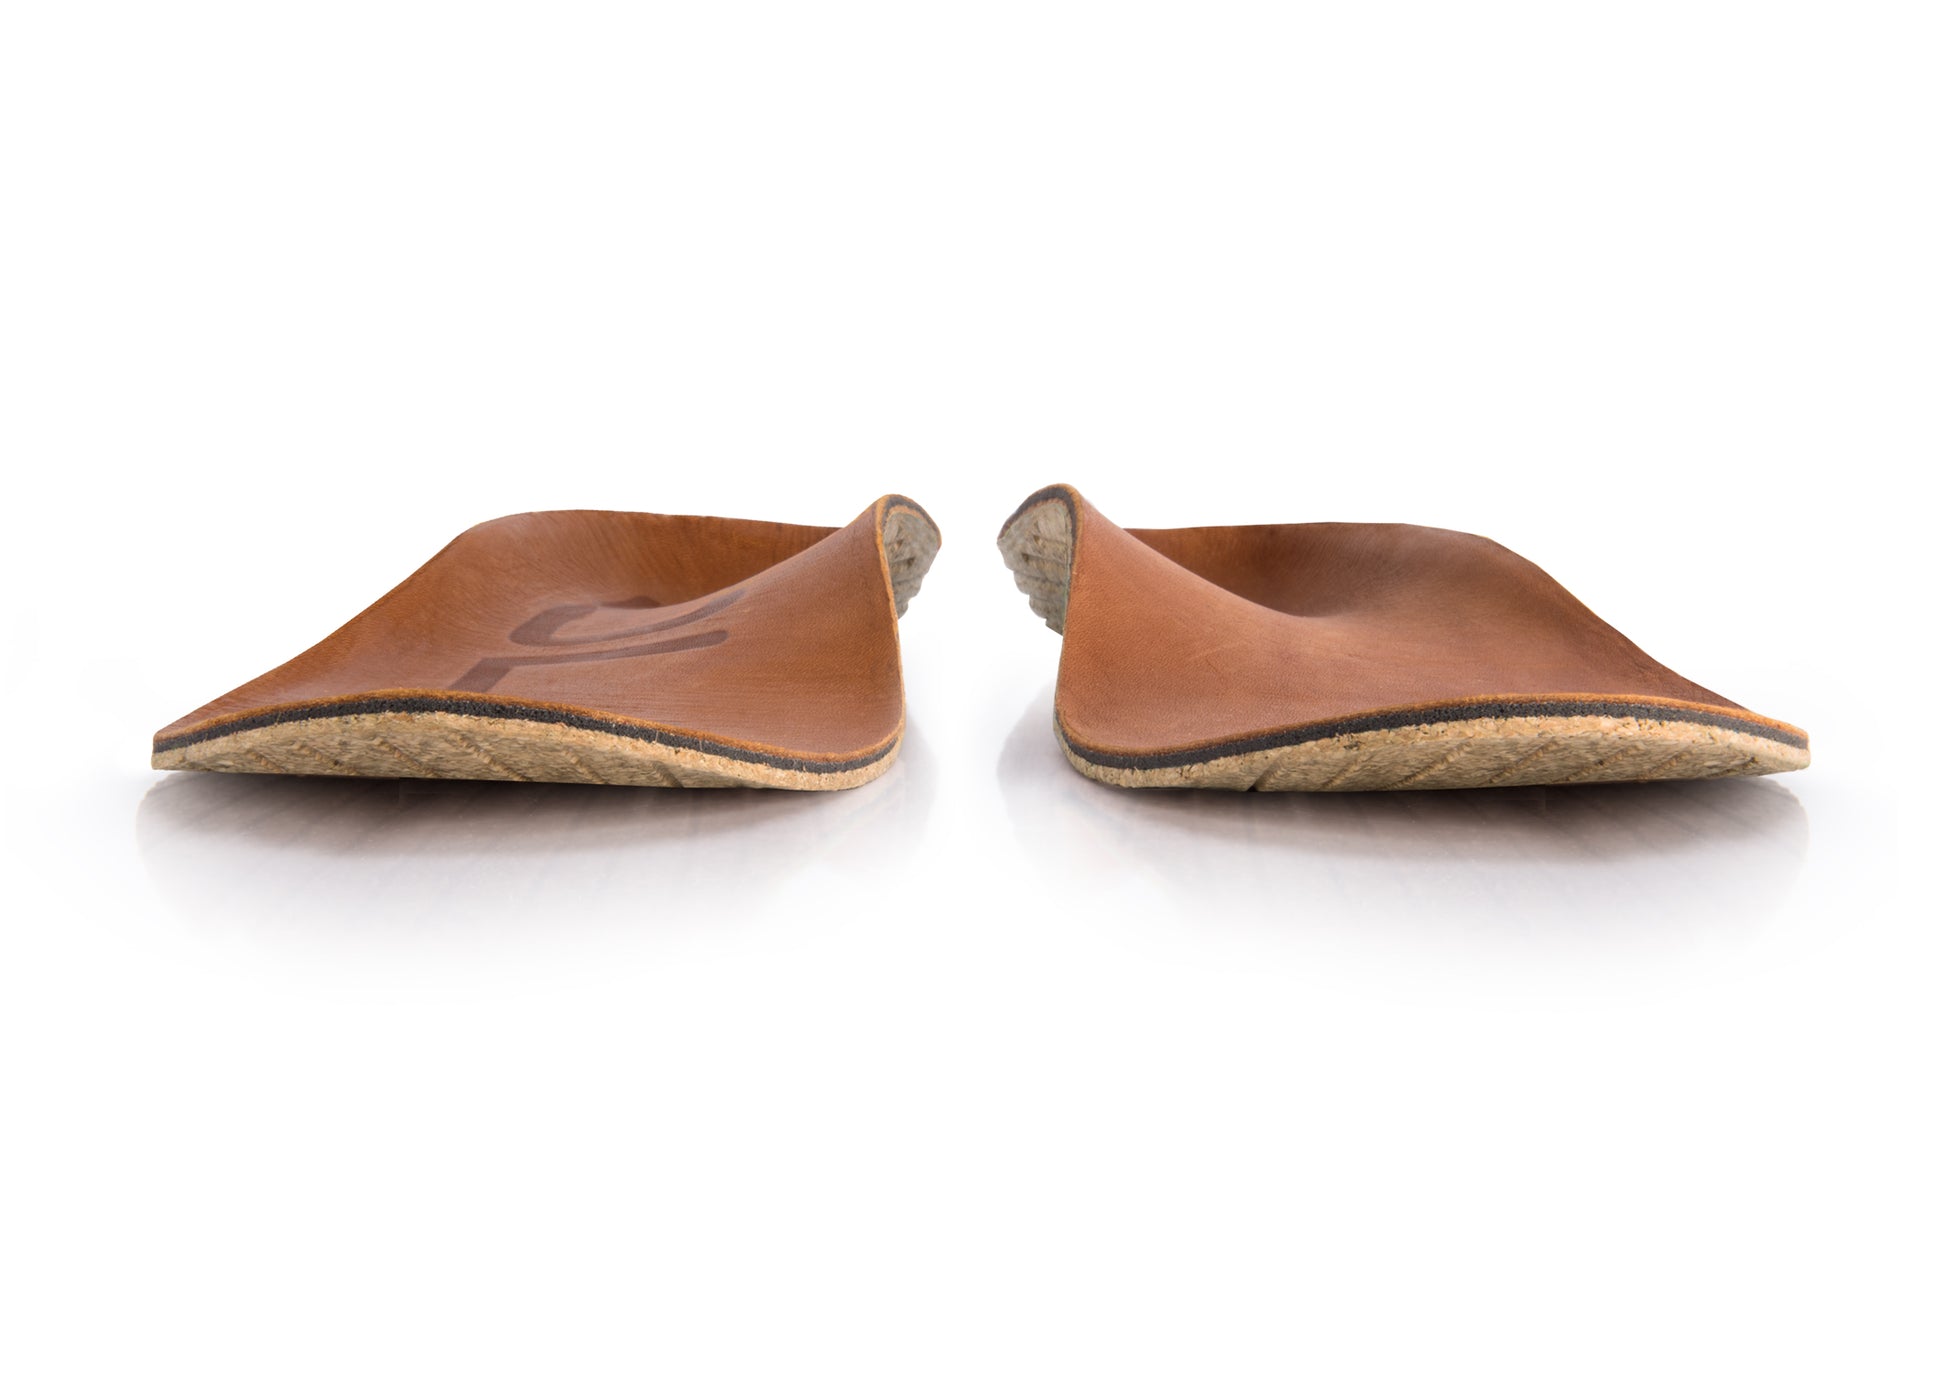 SOLE Casual Footbeds - Medium